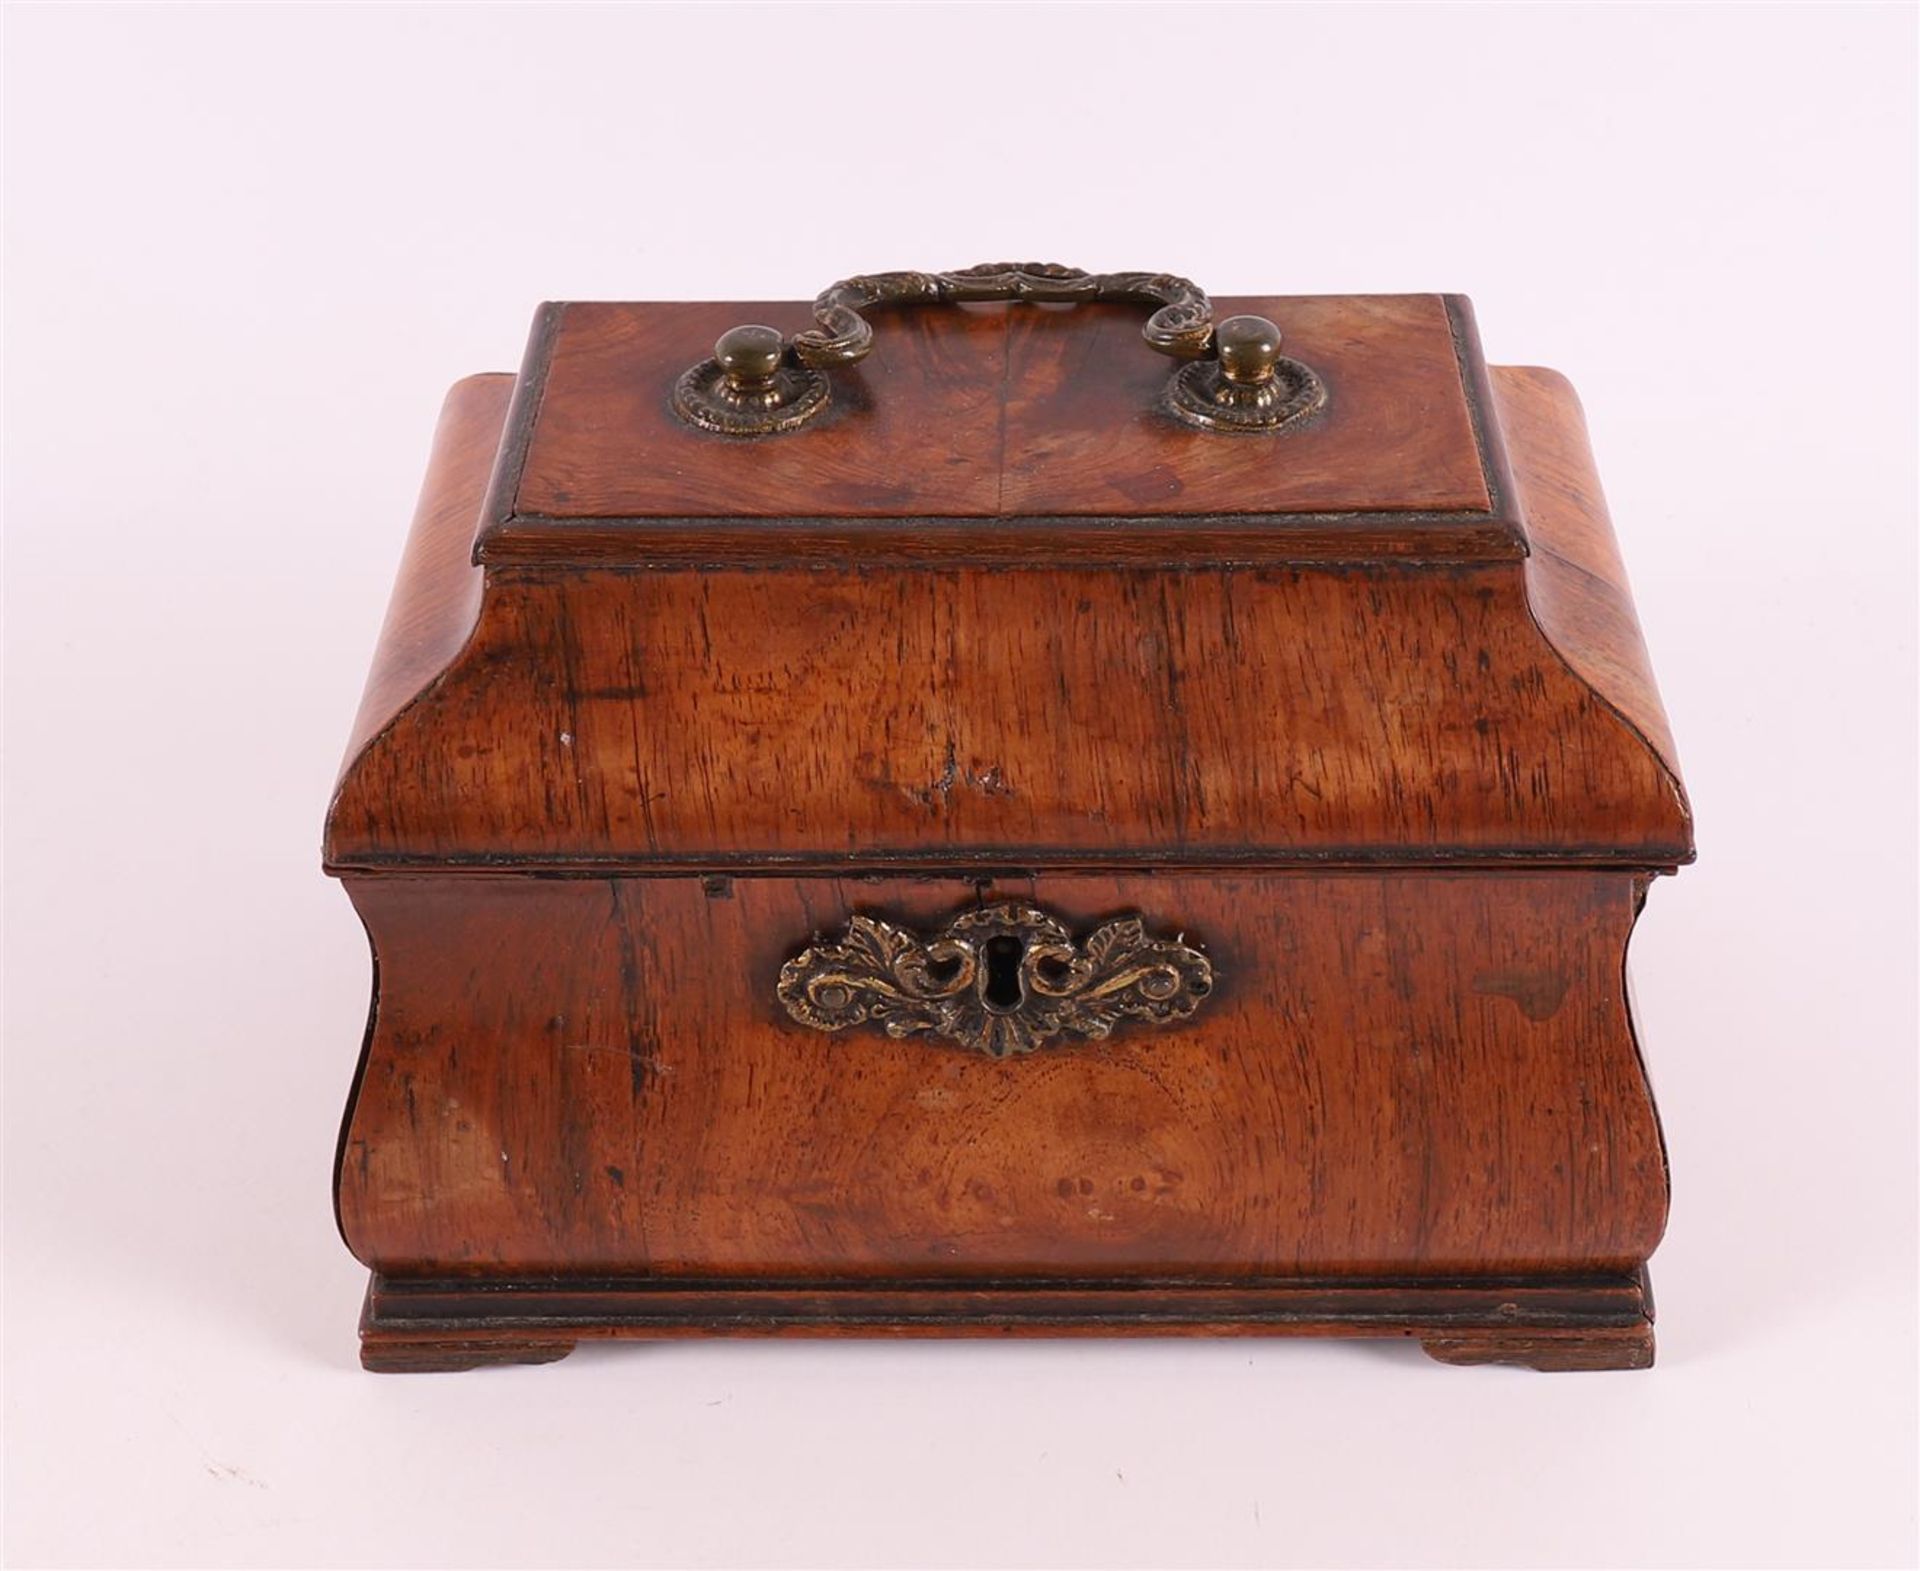 A Dutch rosewood tea box, mid 18th century, h 14 x l 20 x w 12 cm.